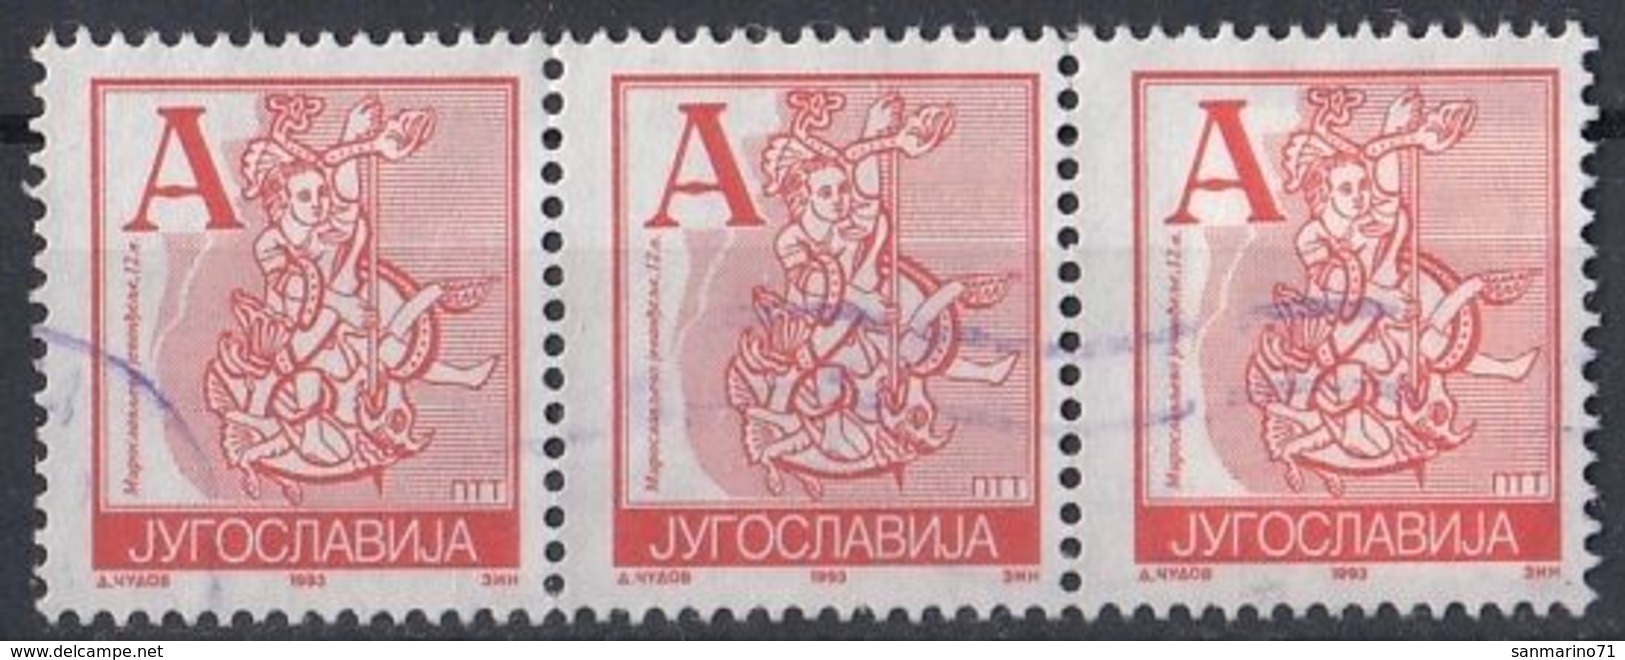 YUGOSLAVIA 2601,used - Oblitérés